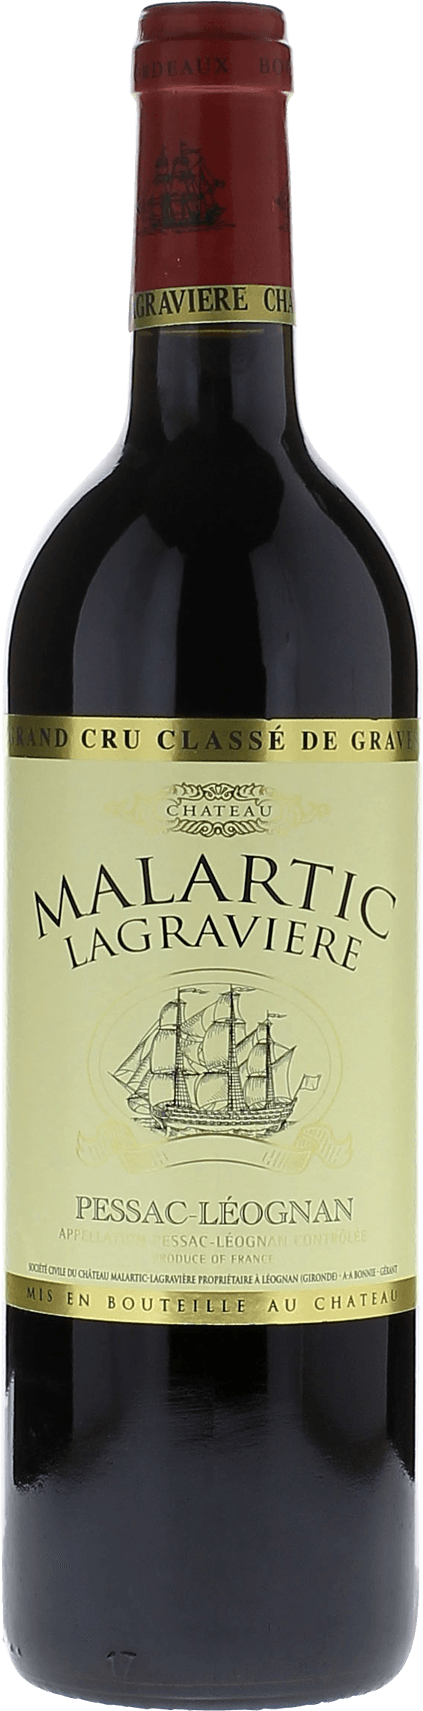 Malartic lagraviere rouge 2021 Grand Cru Class Graves, Bordeaux rouge